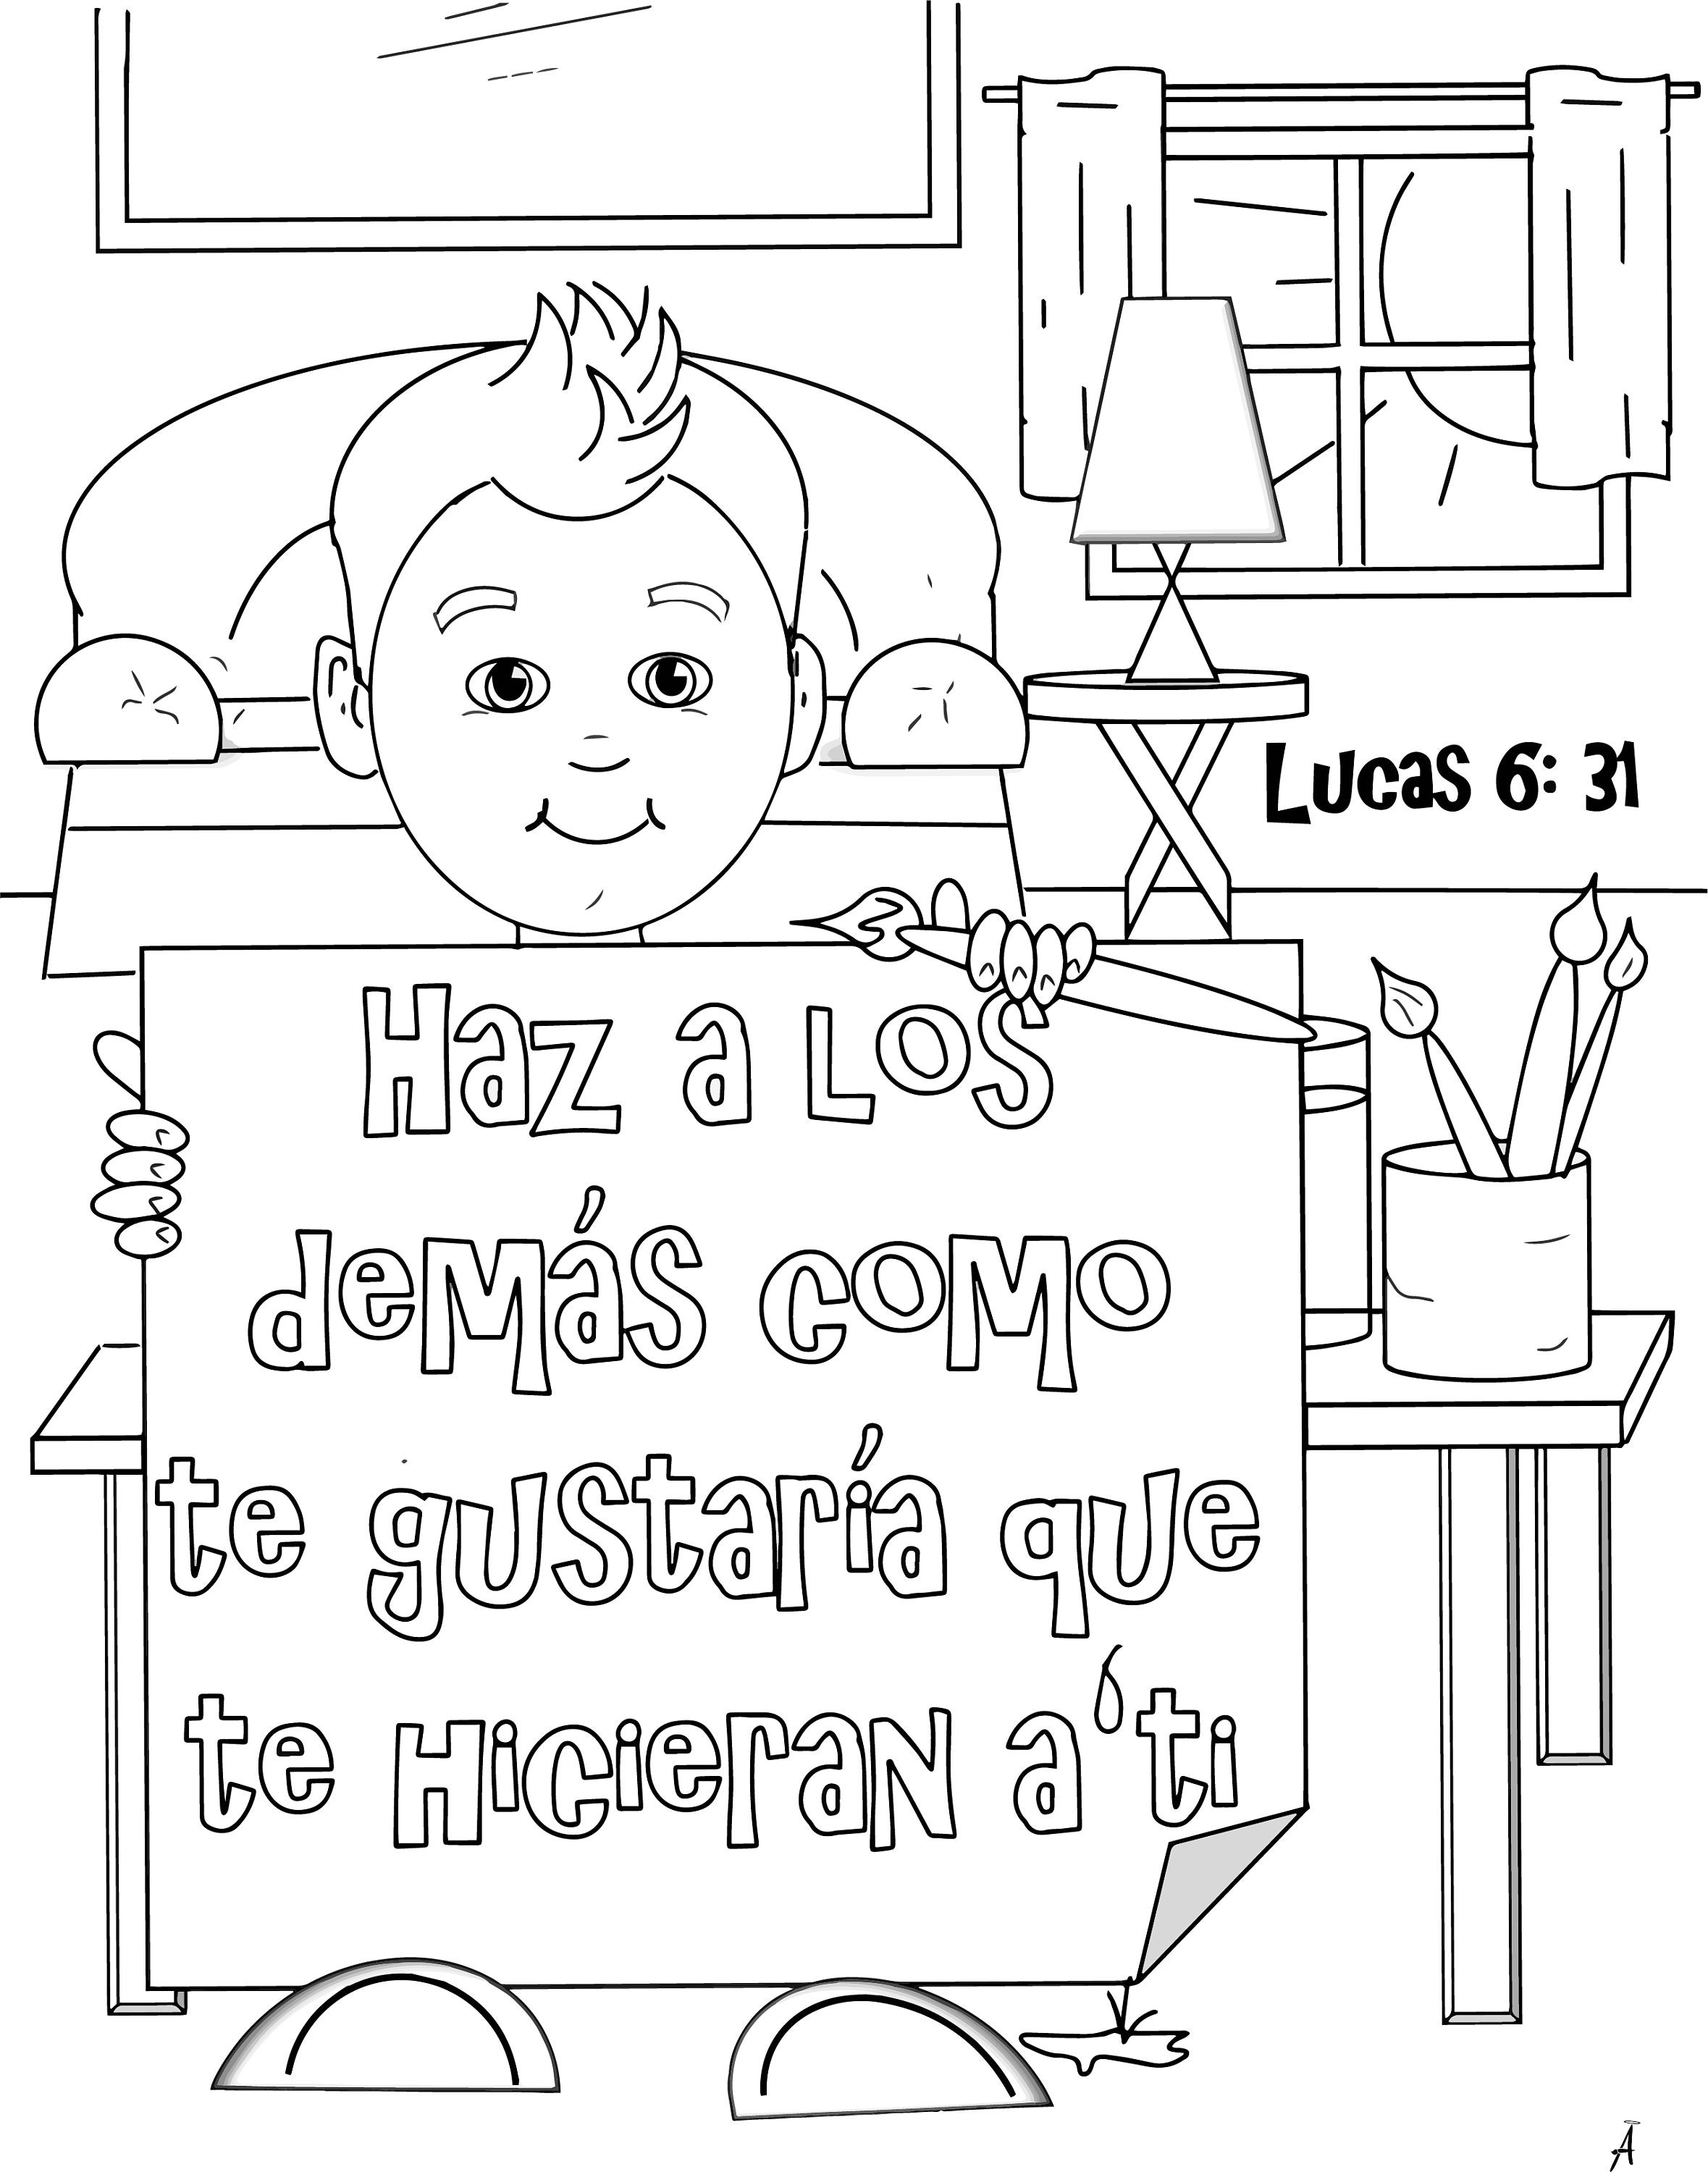 Luke little boy joey spanish coloring page for kids bible verse fun creative learning inspirational sayings download